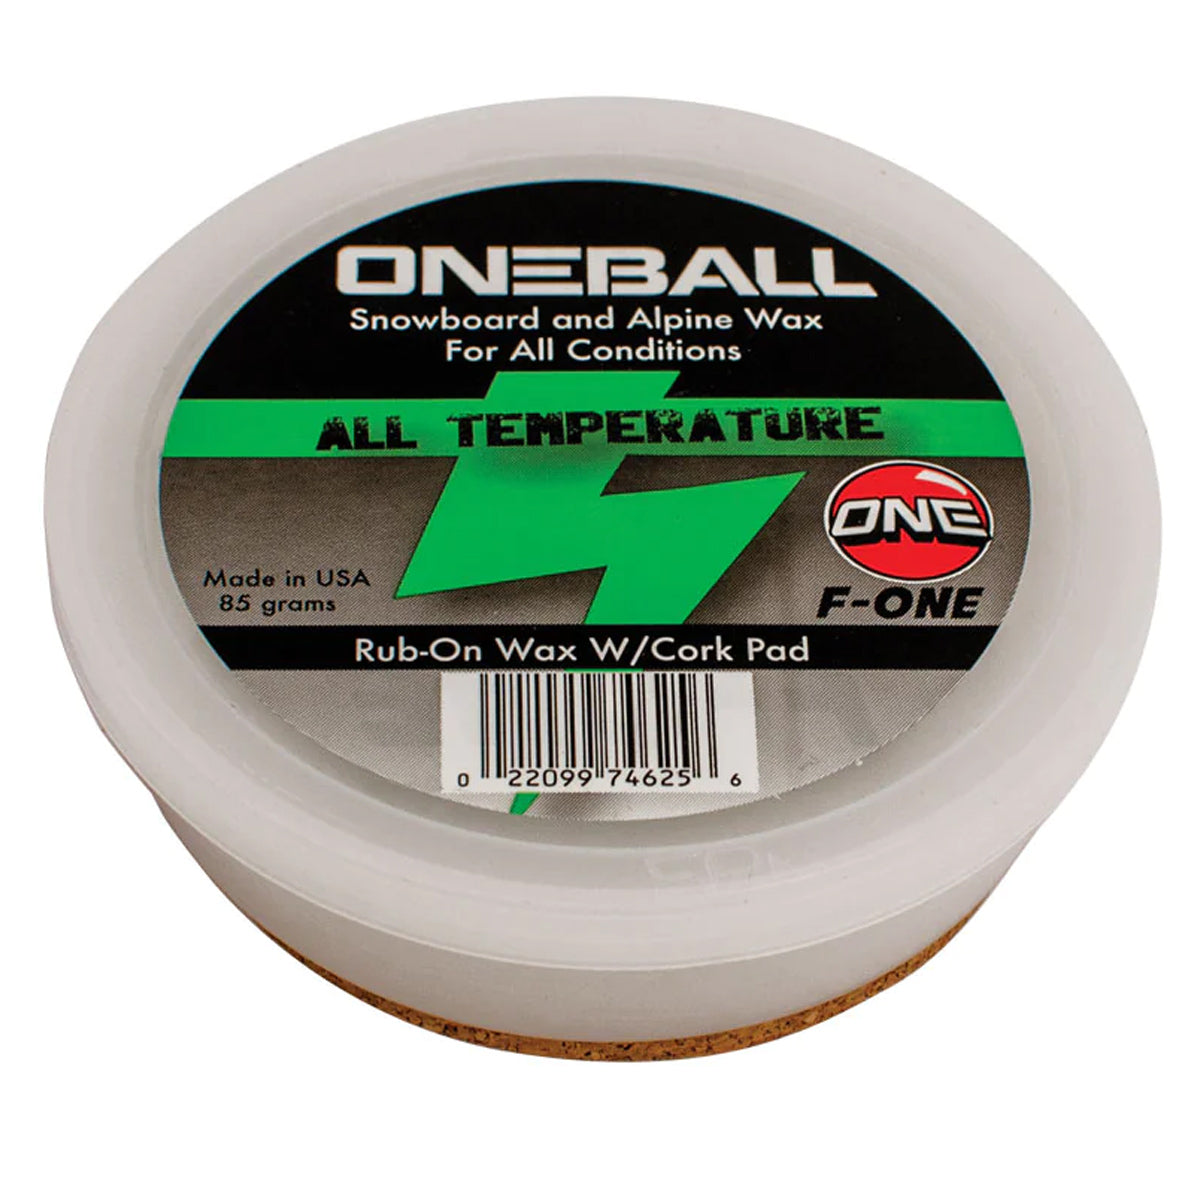 One Ball Jay F-1 Rub On Wax All Temp With Cork Applicator Snowboard Wax - 85g image 1